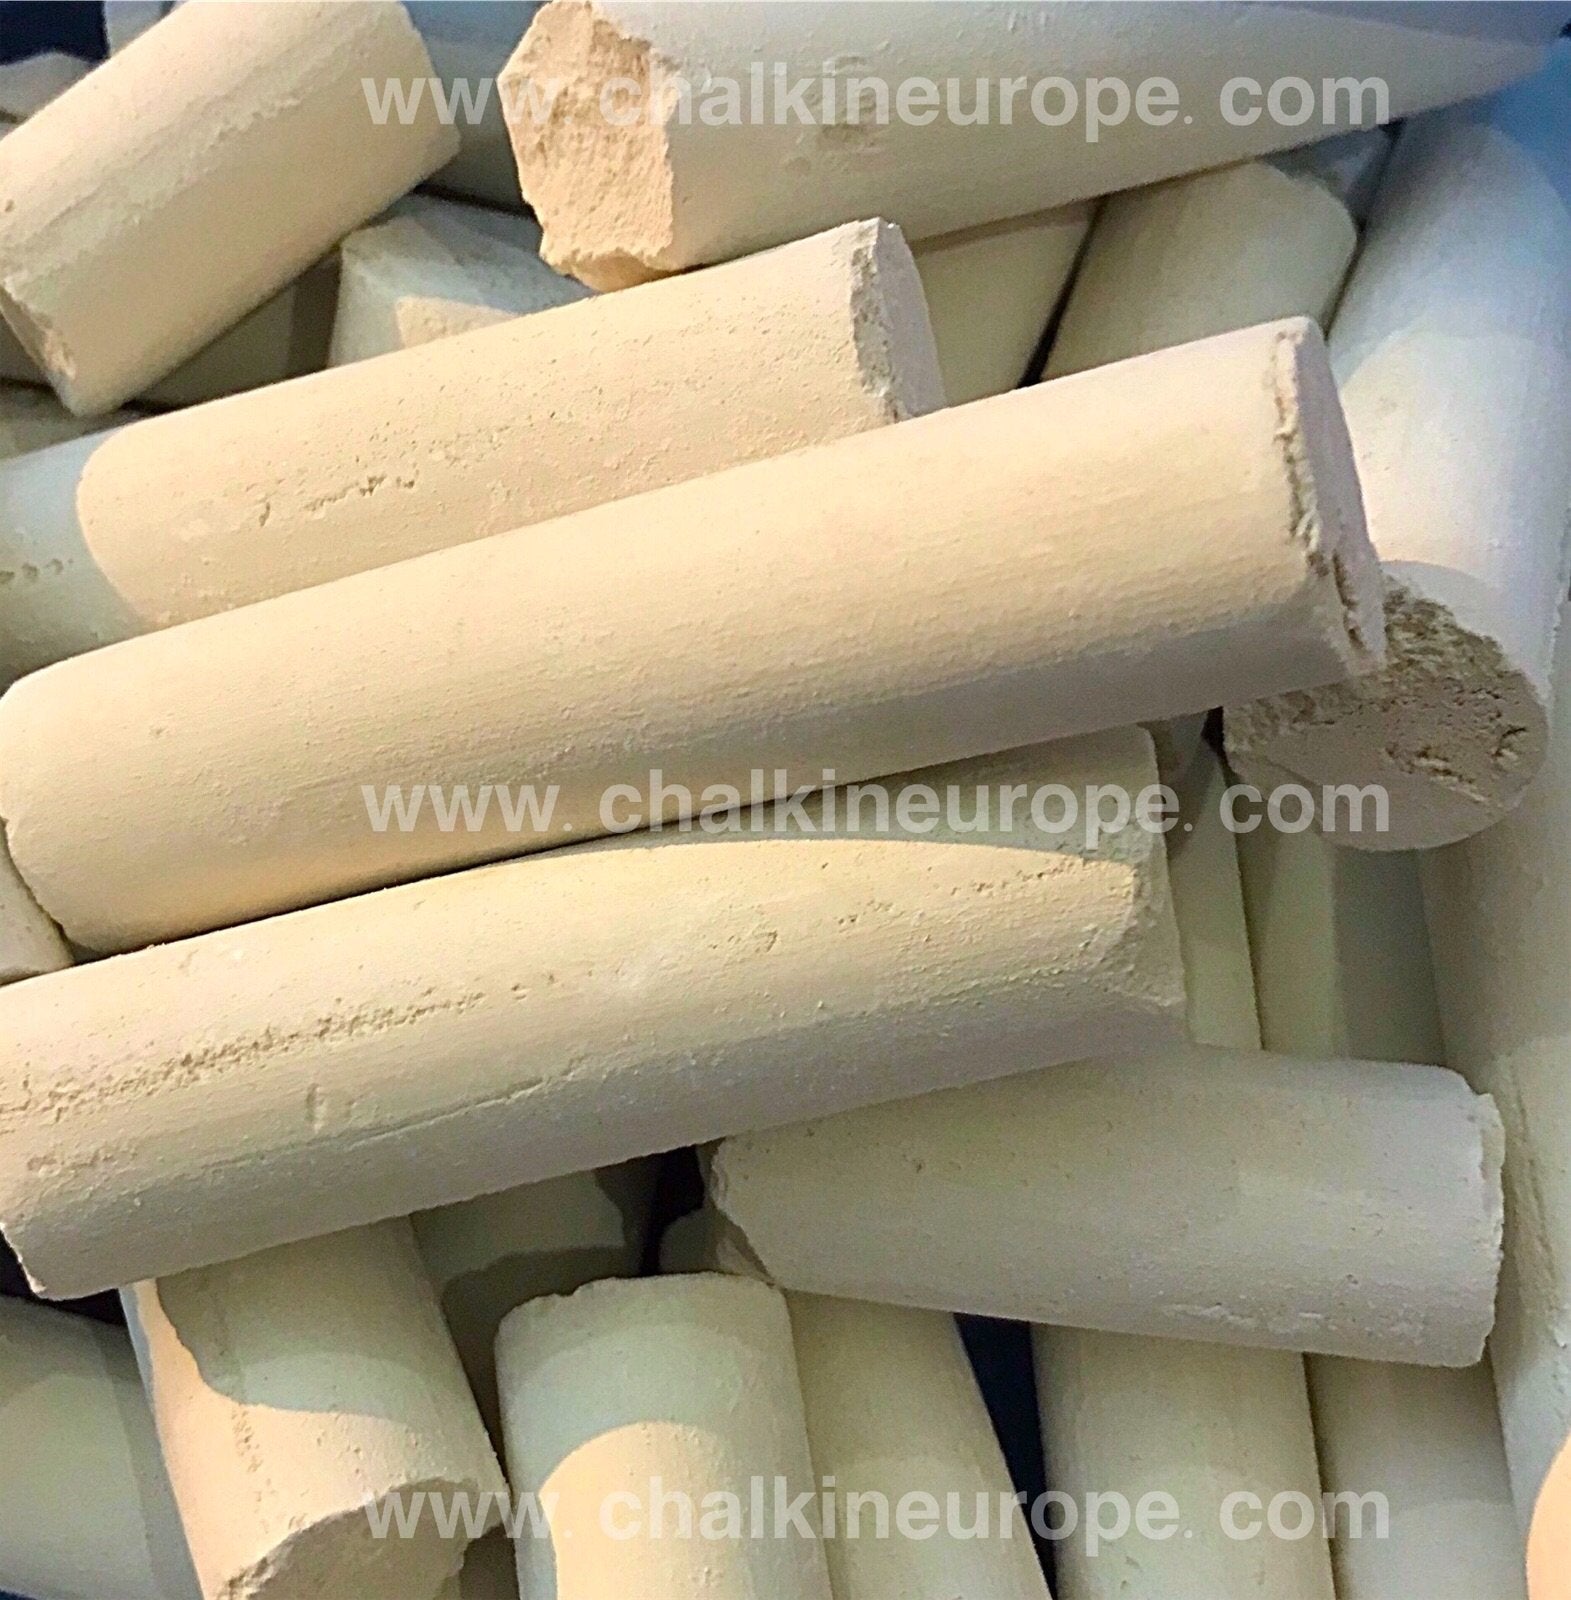 Bentonite Chalk Sticks - Chalkineurope